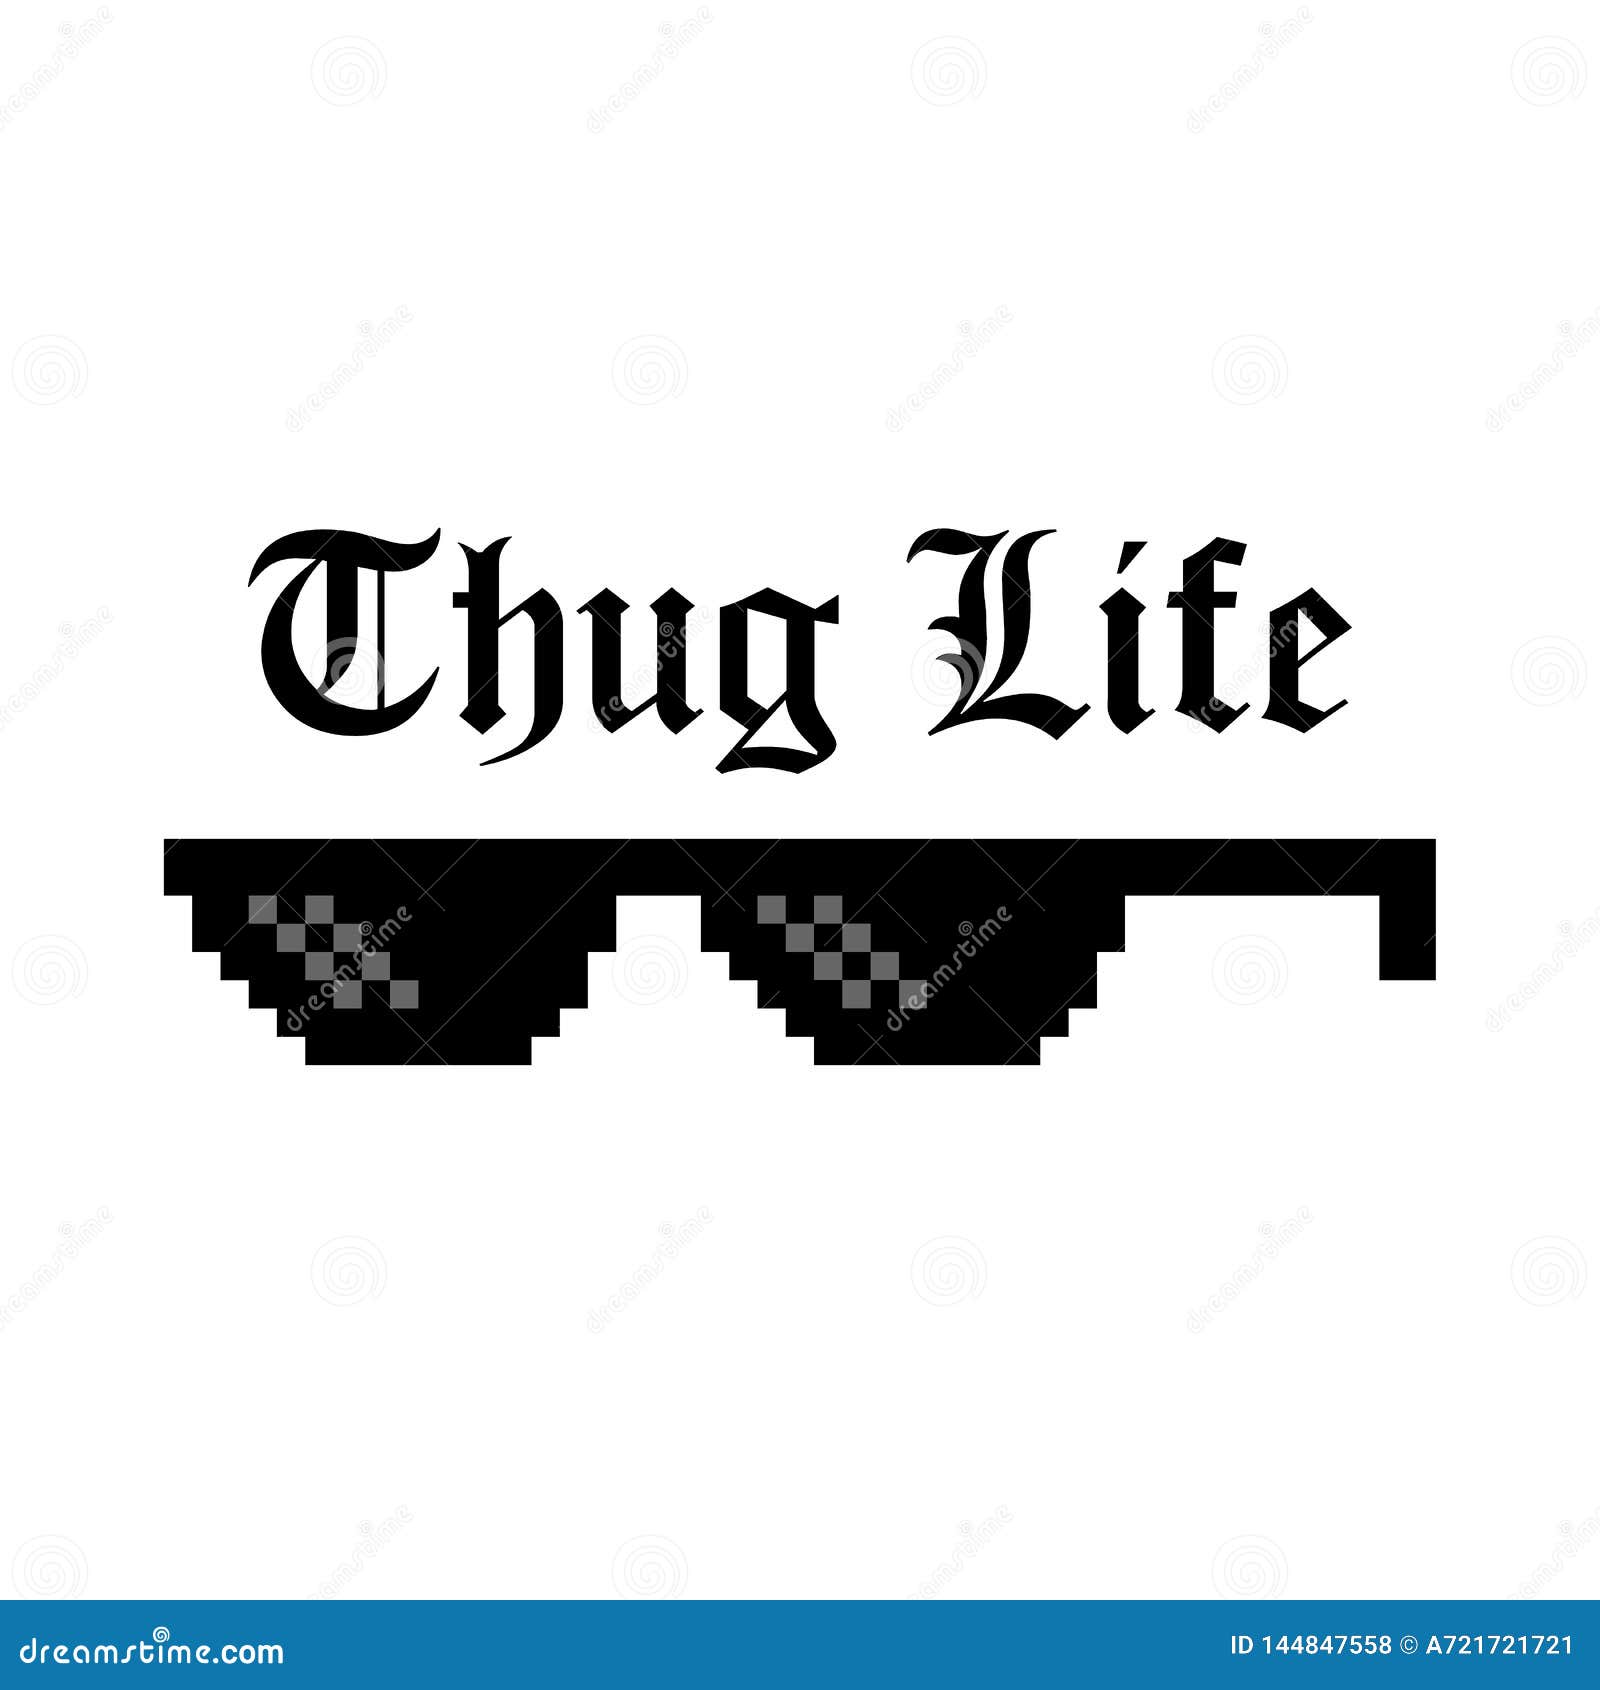 Creative Illustration Of Pixel Glasses Of Thug Life Meme Isolated On ...